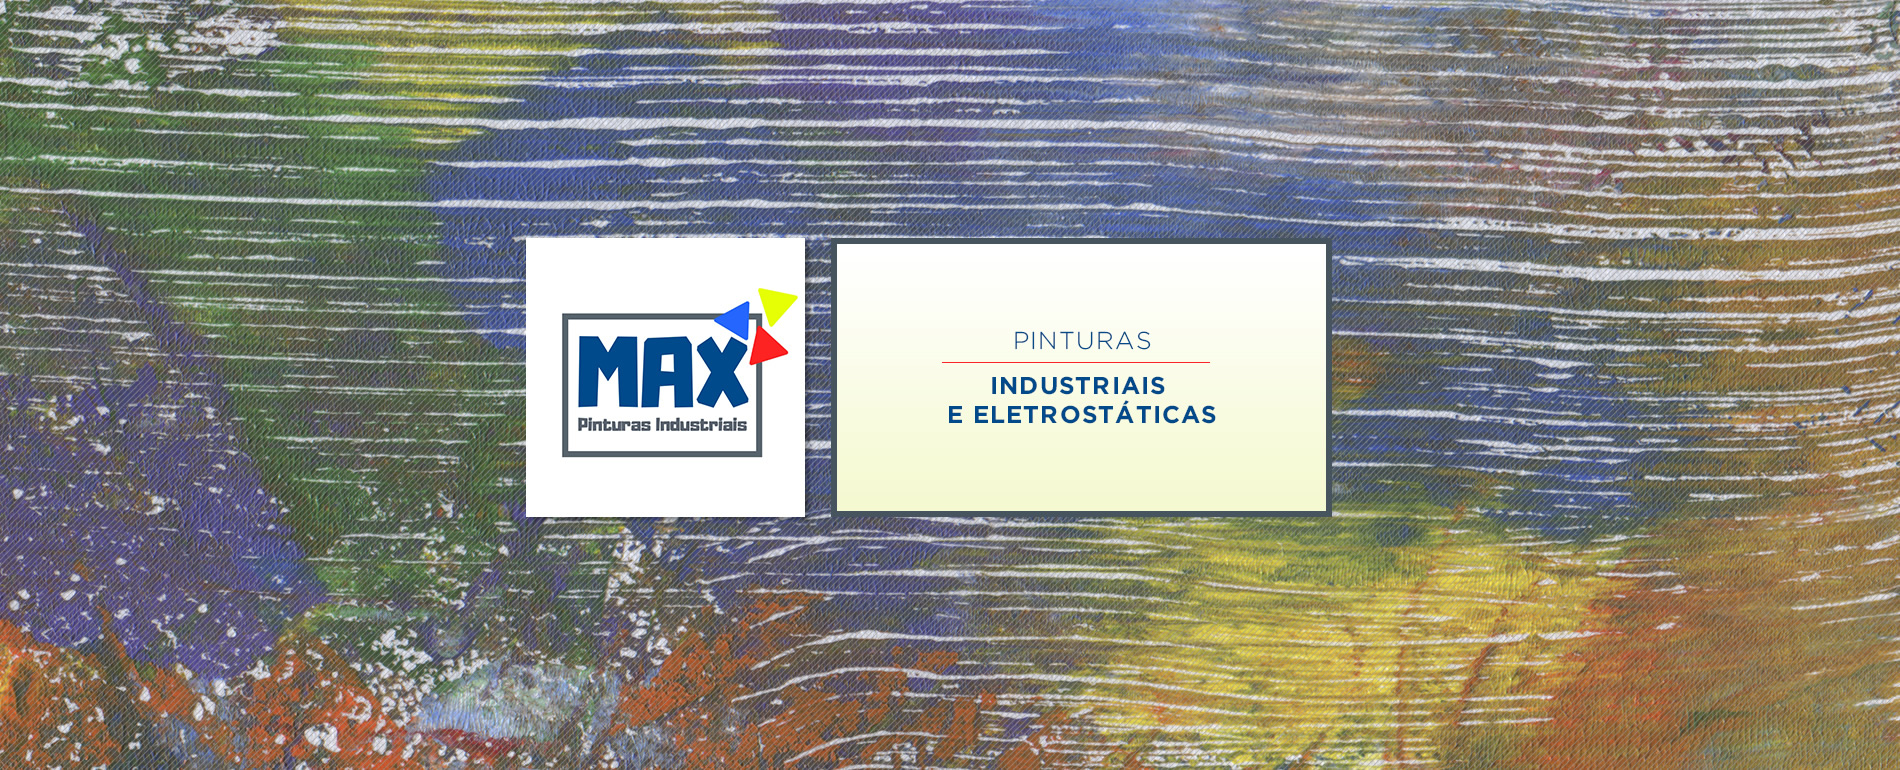 Max Pinturas Industriais